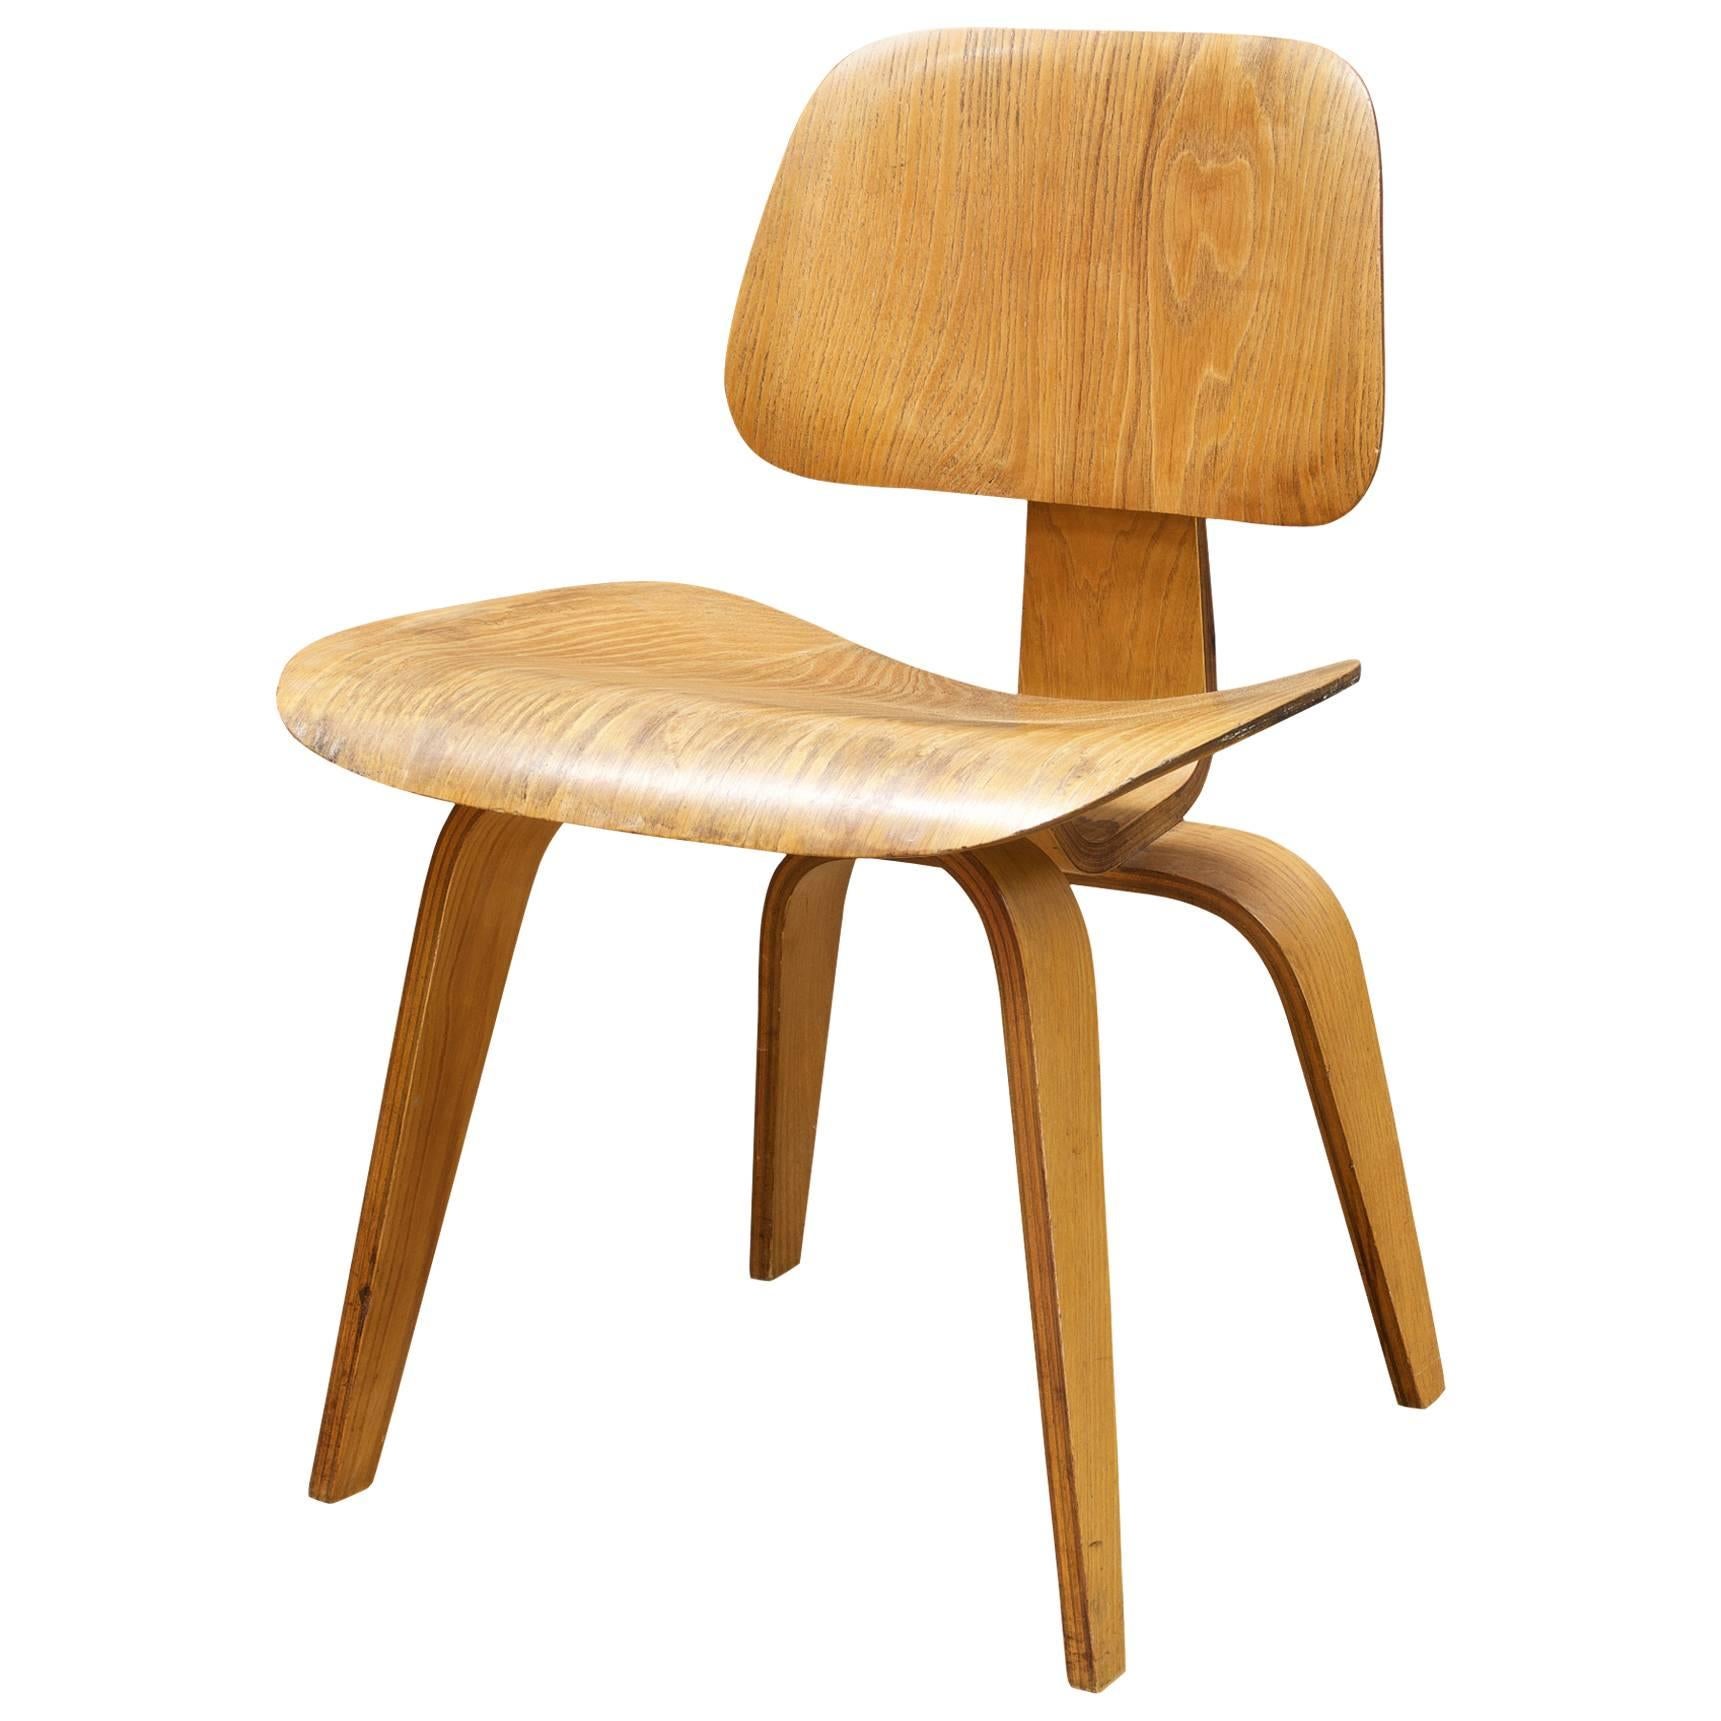 1948 Charles Eames Evans Bent Plywood Herman Miller Dining Chair